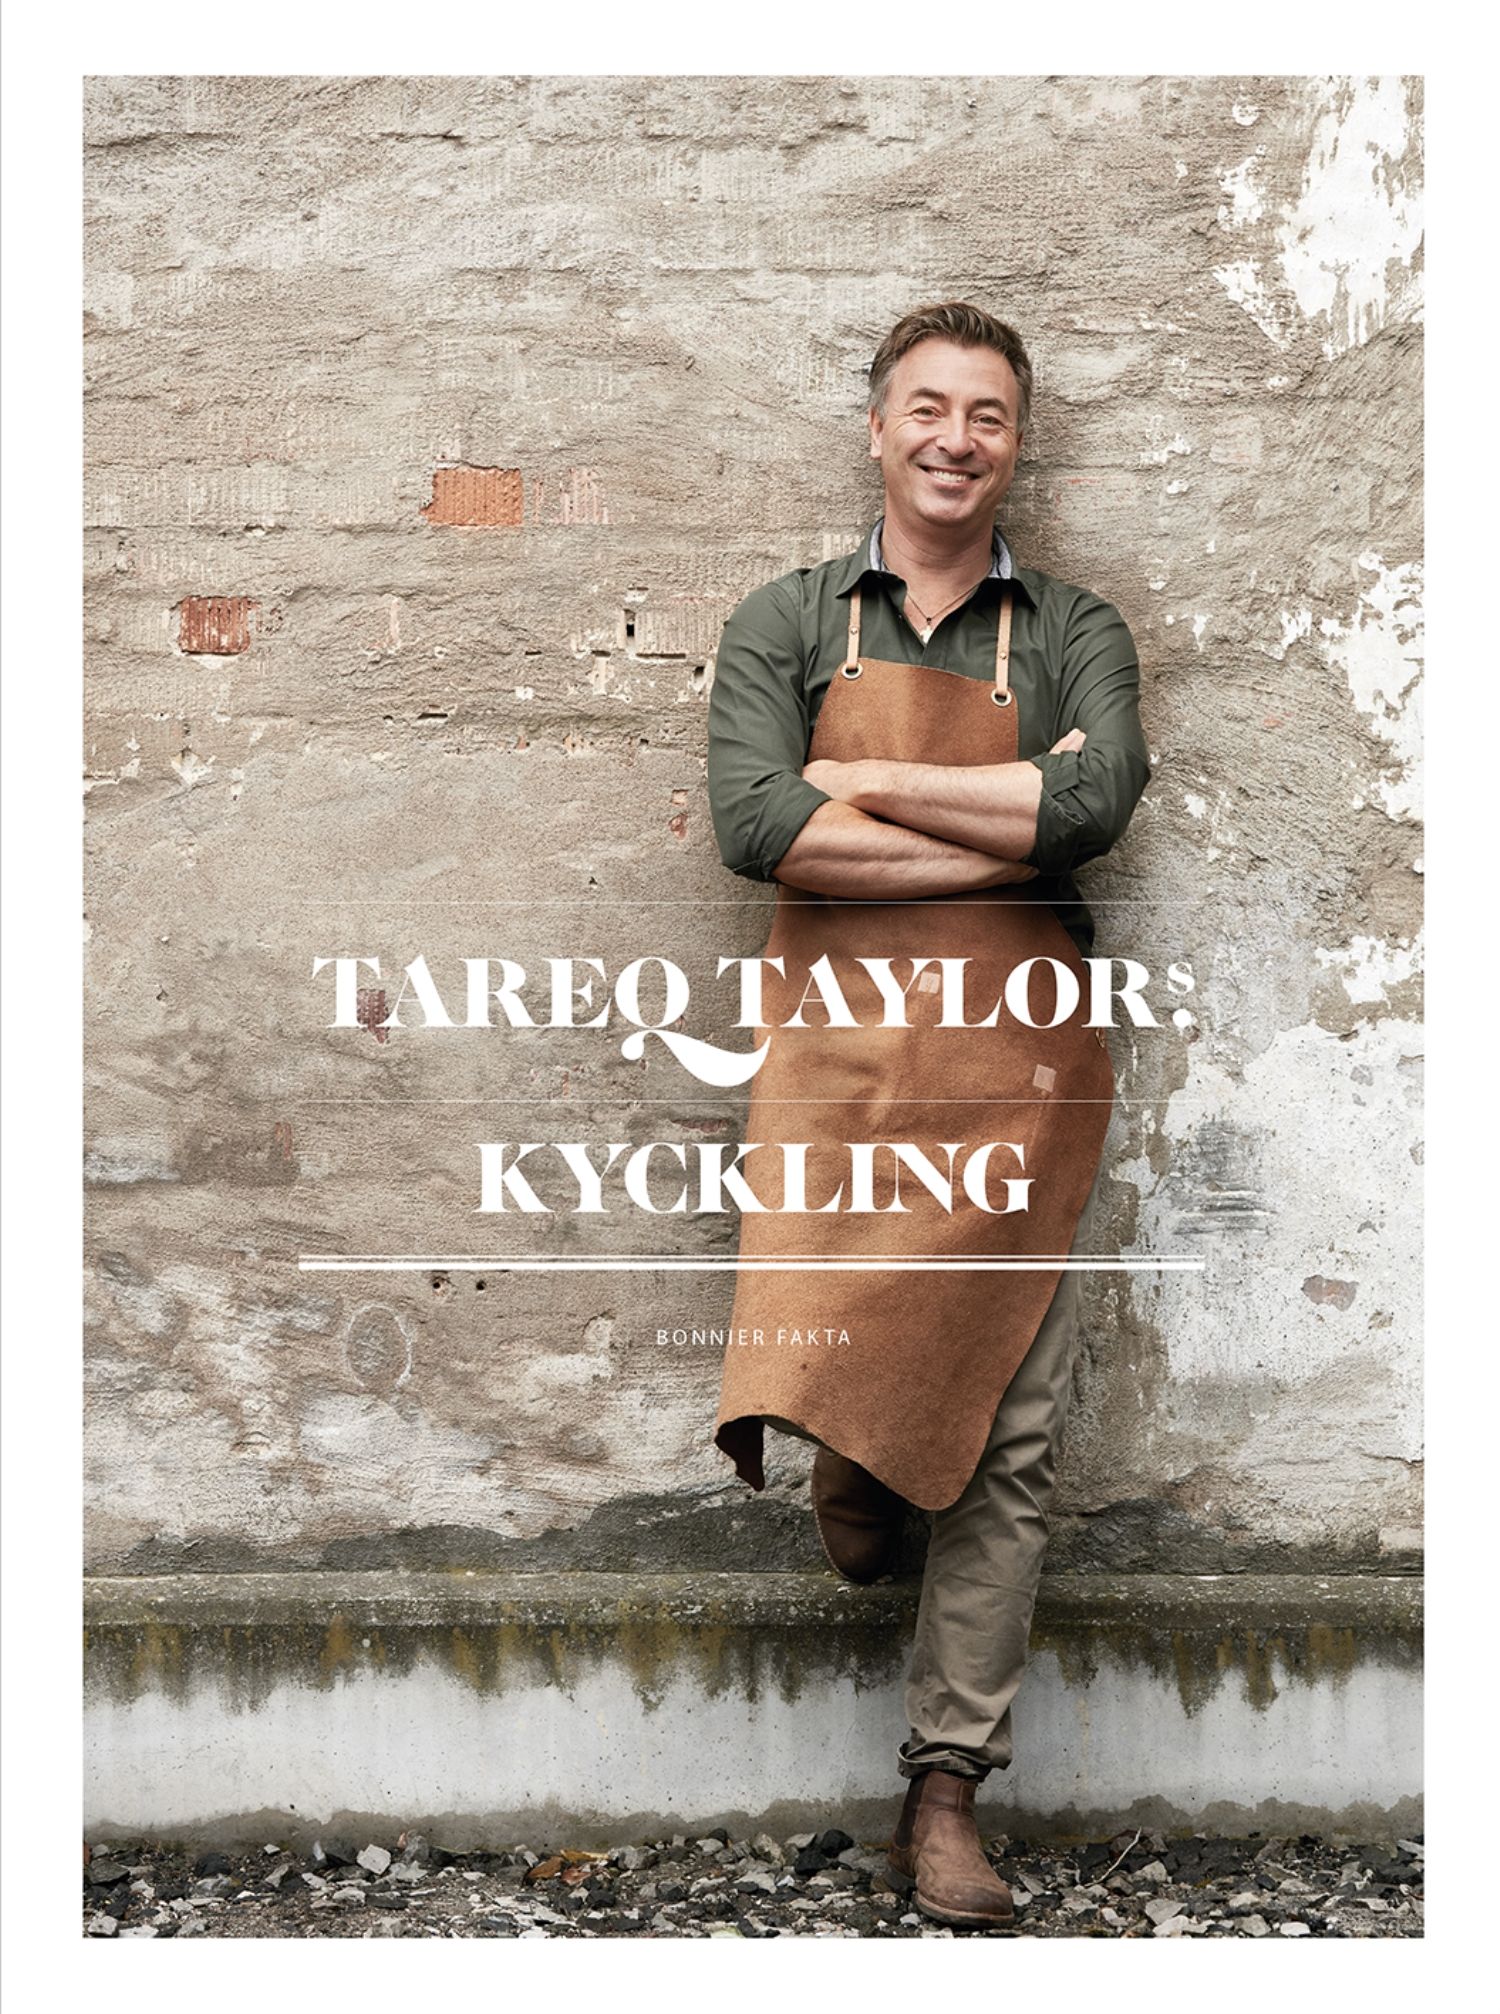 Tareq Taylors kyckling, e-bok av Tareq Taylor